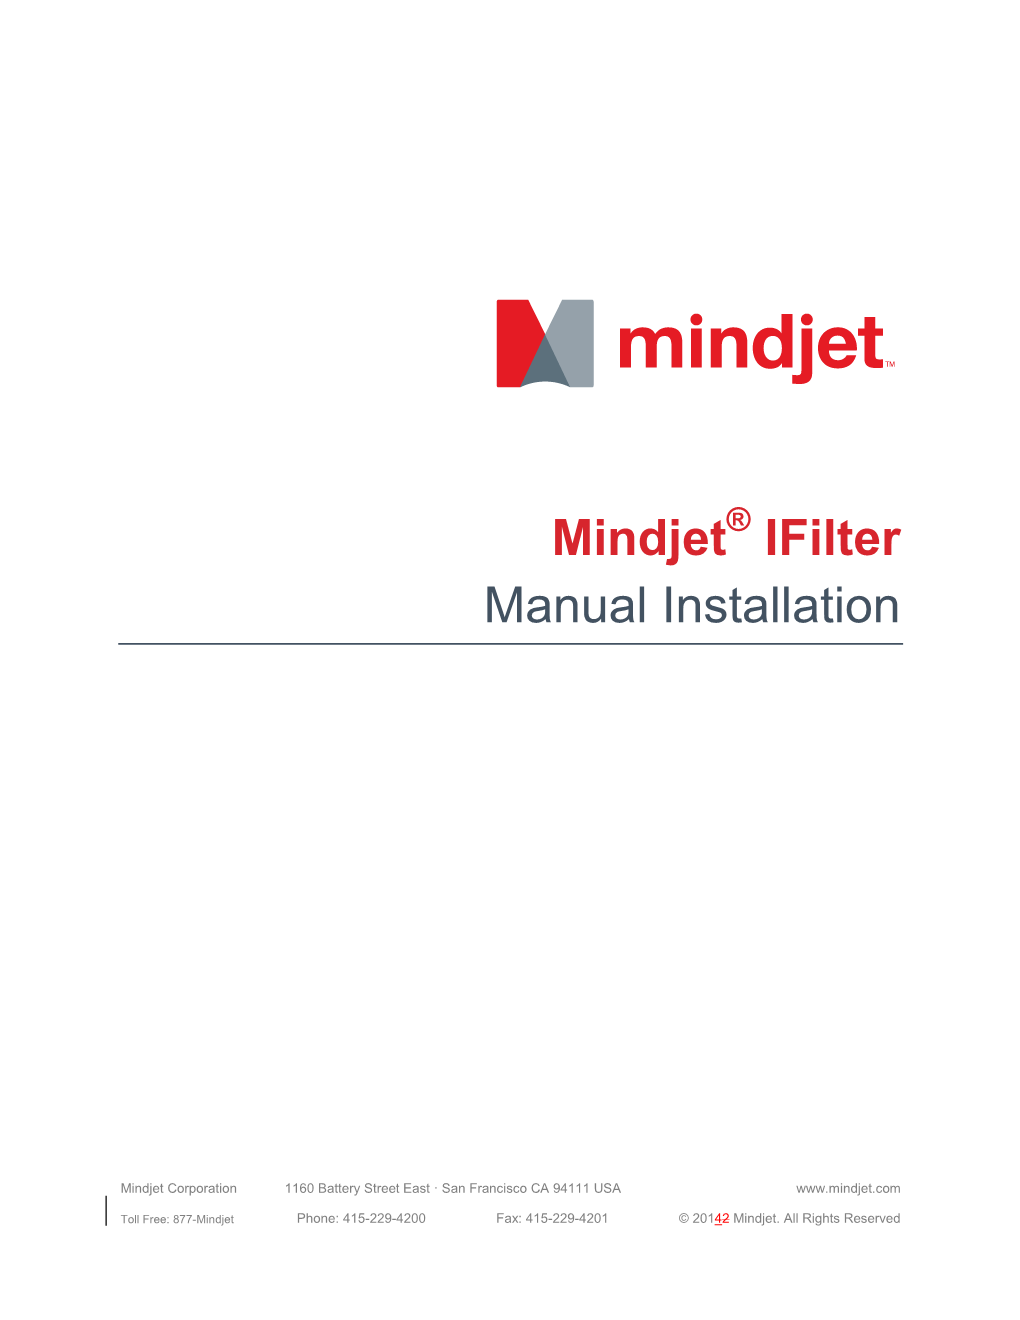 Ifilter Manual Installation, Version